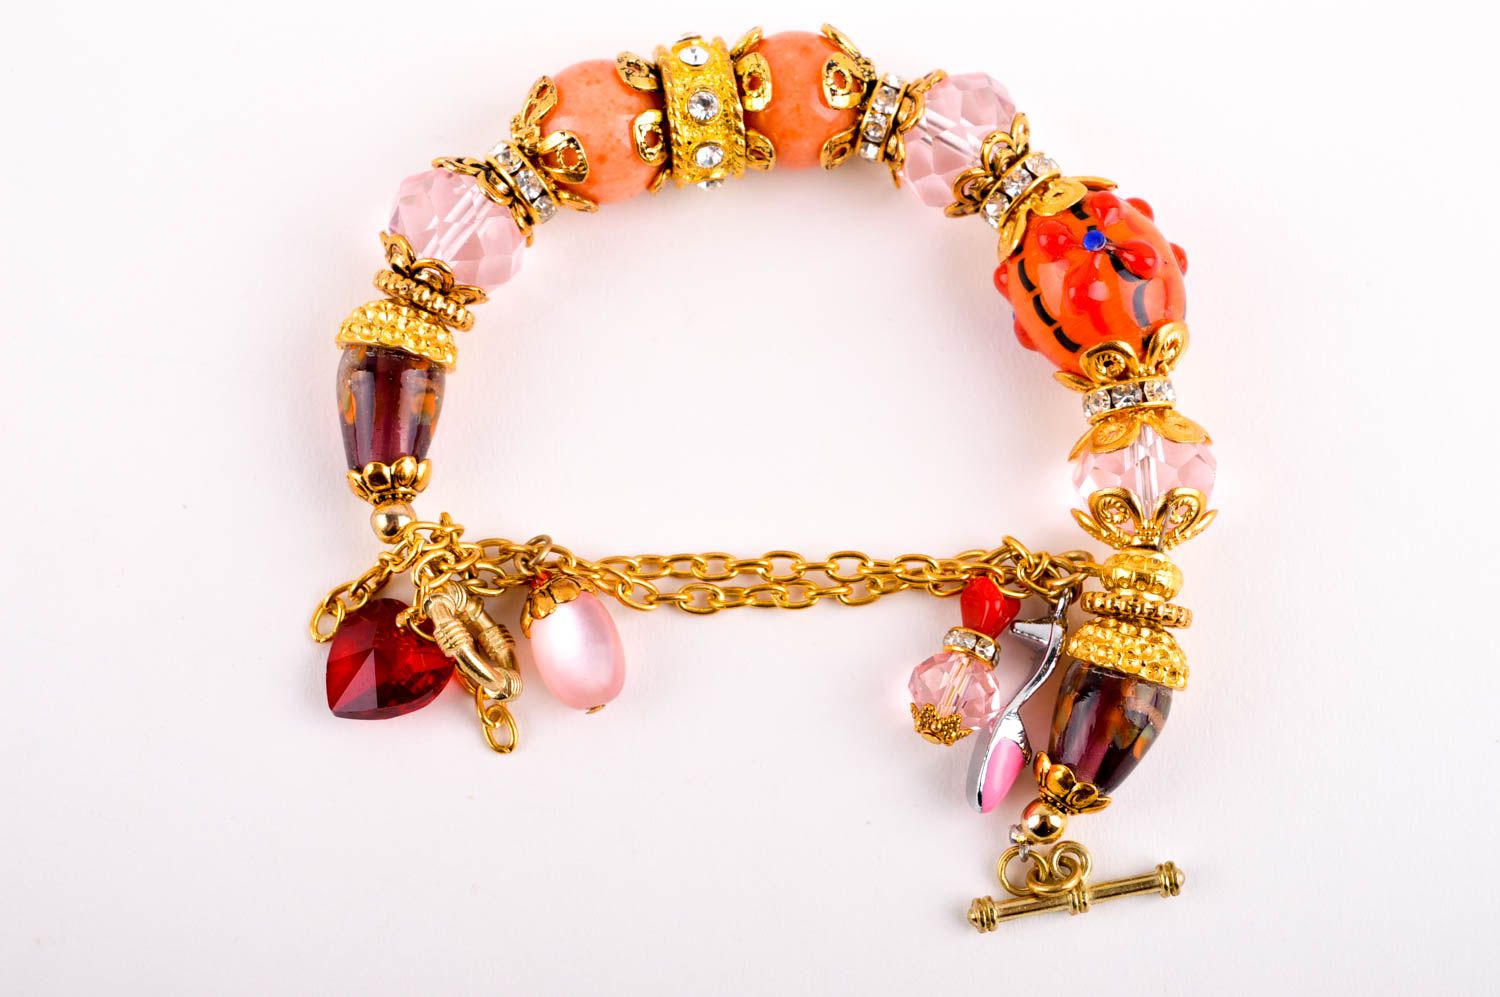 Handmade bracelet with natural stones designer stone jewelry fashion jewelry photo 4